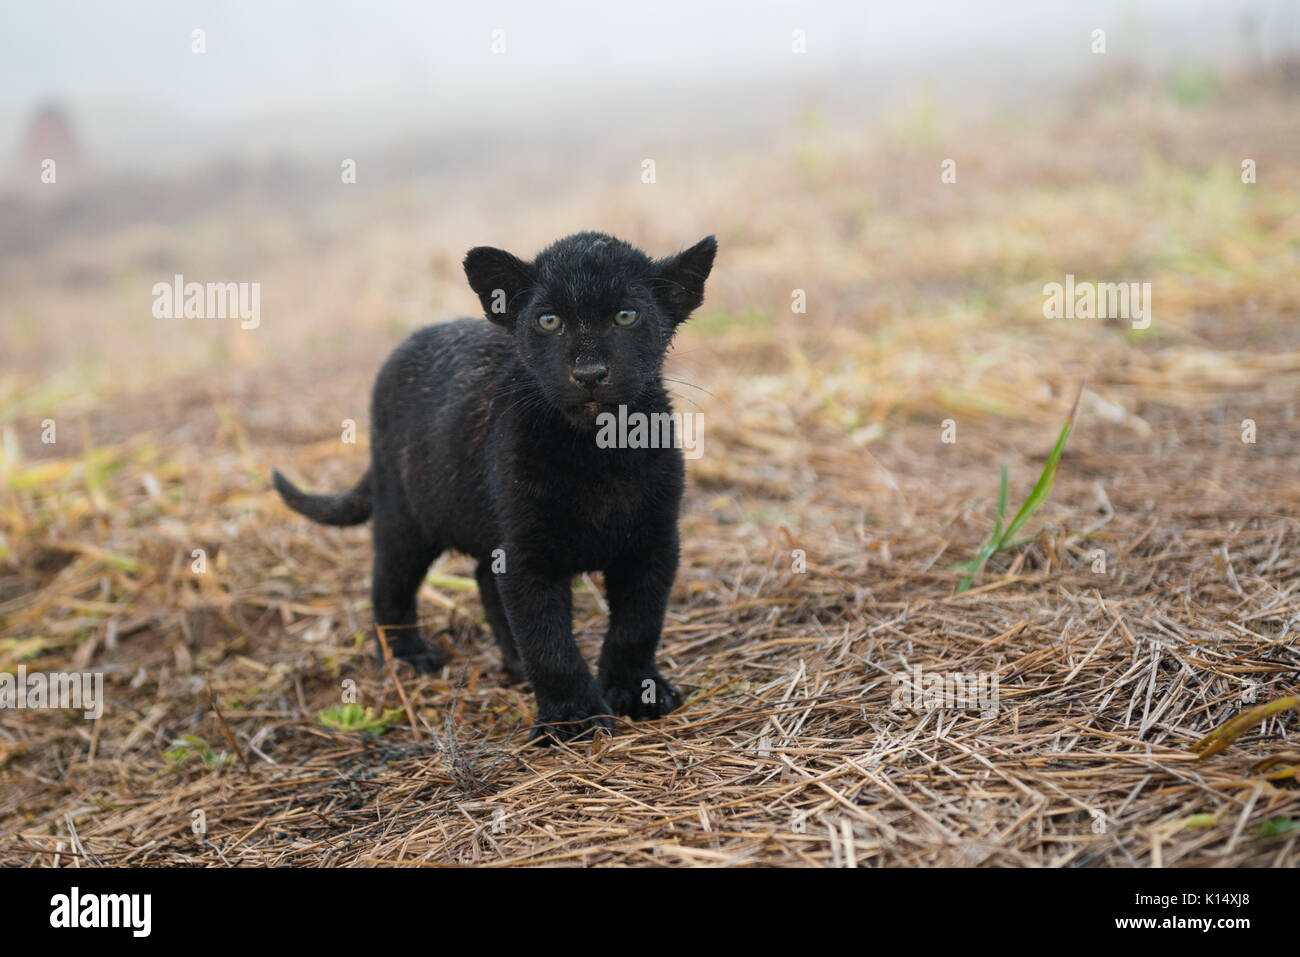 Baby Black Jaguar that was born at Instituto Onça Pintada Stock Photo